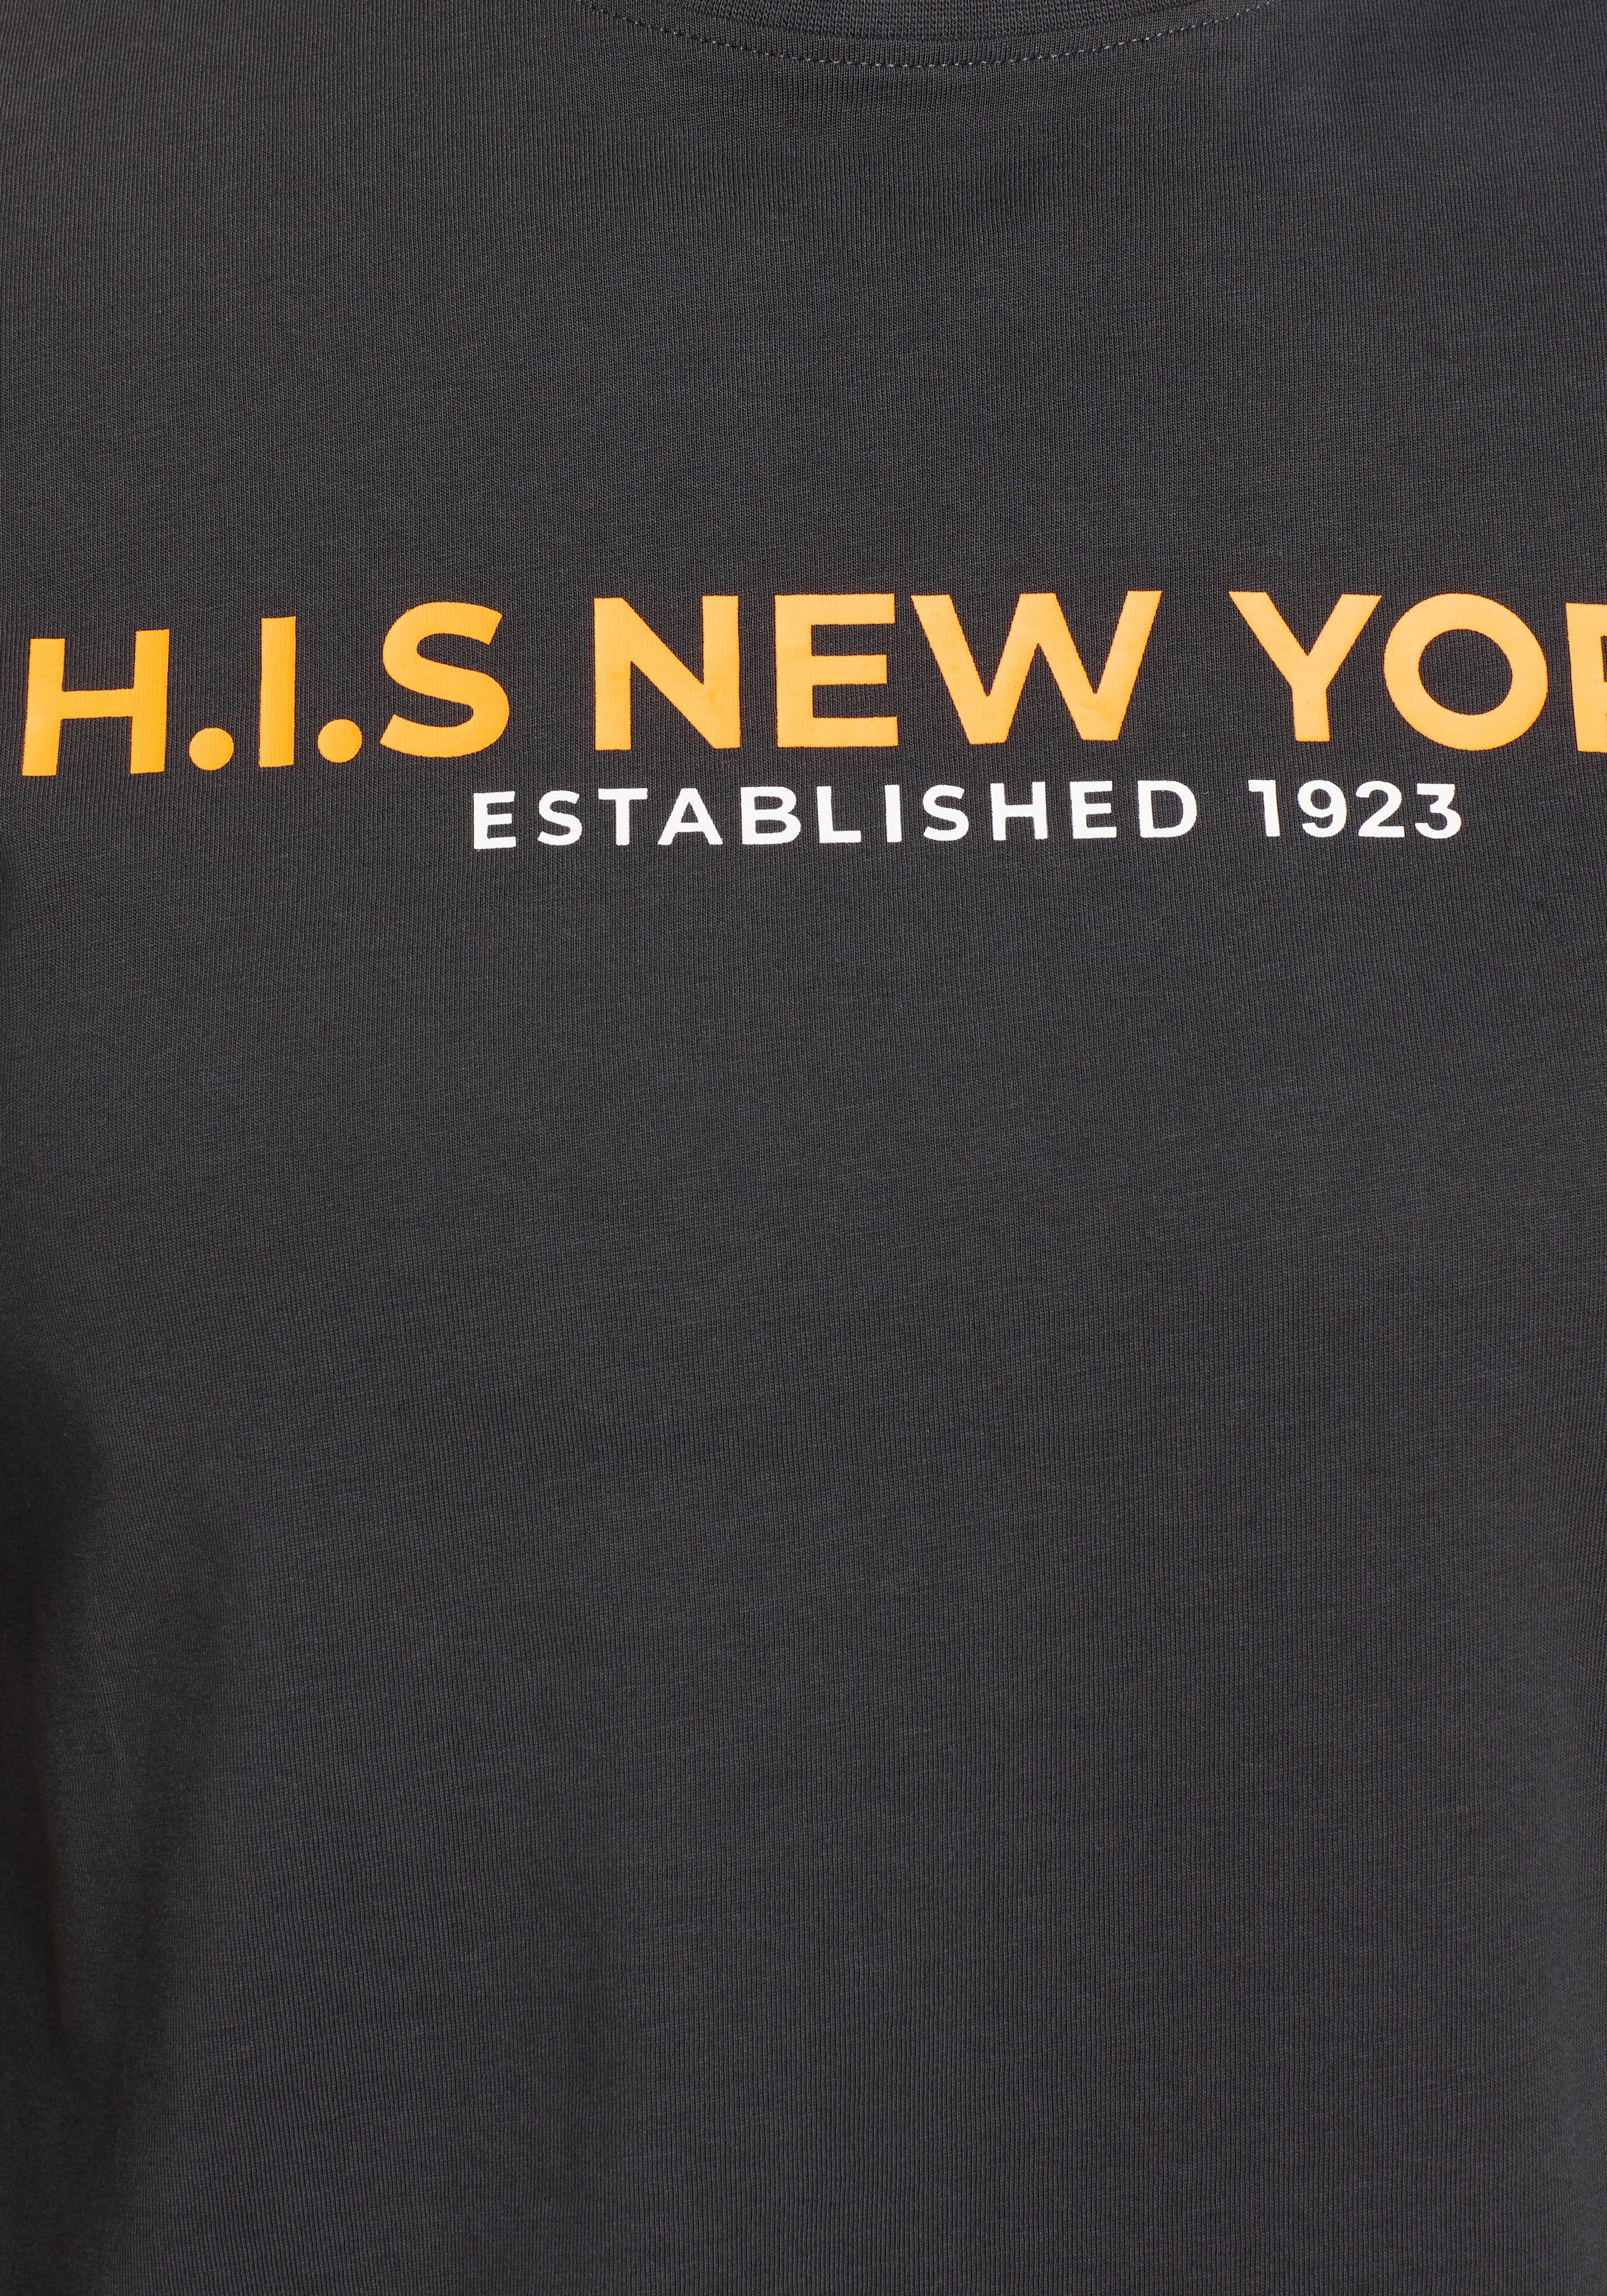 H.I.S T-Shirt, Mit großem Frontprint